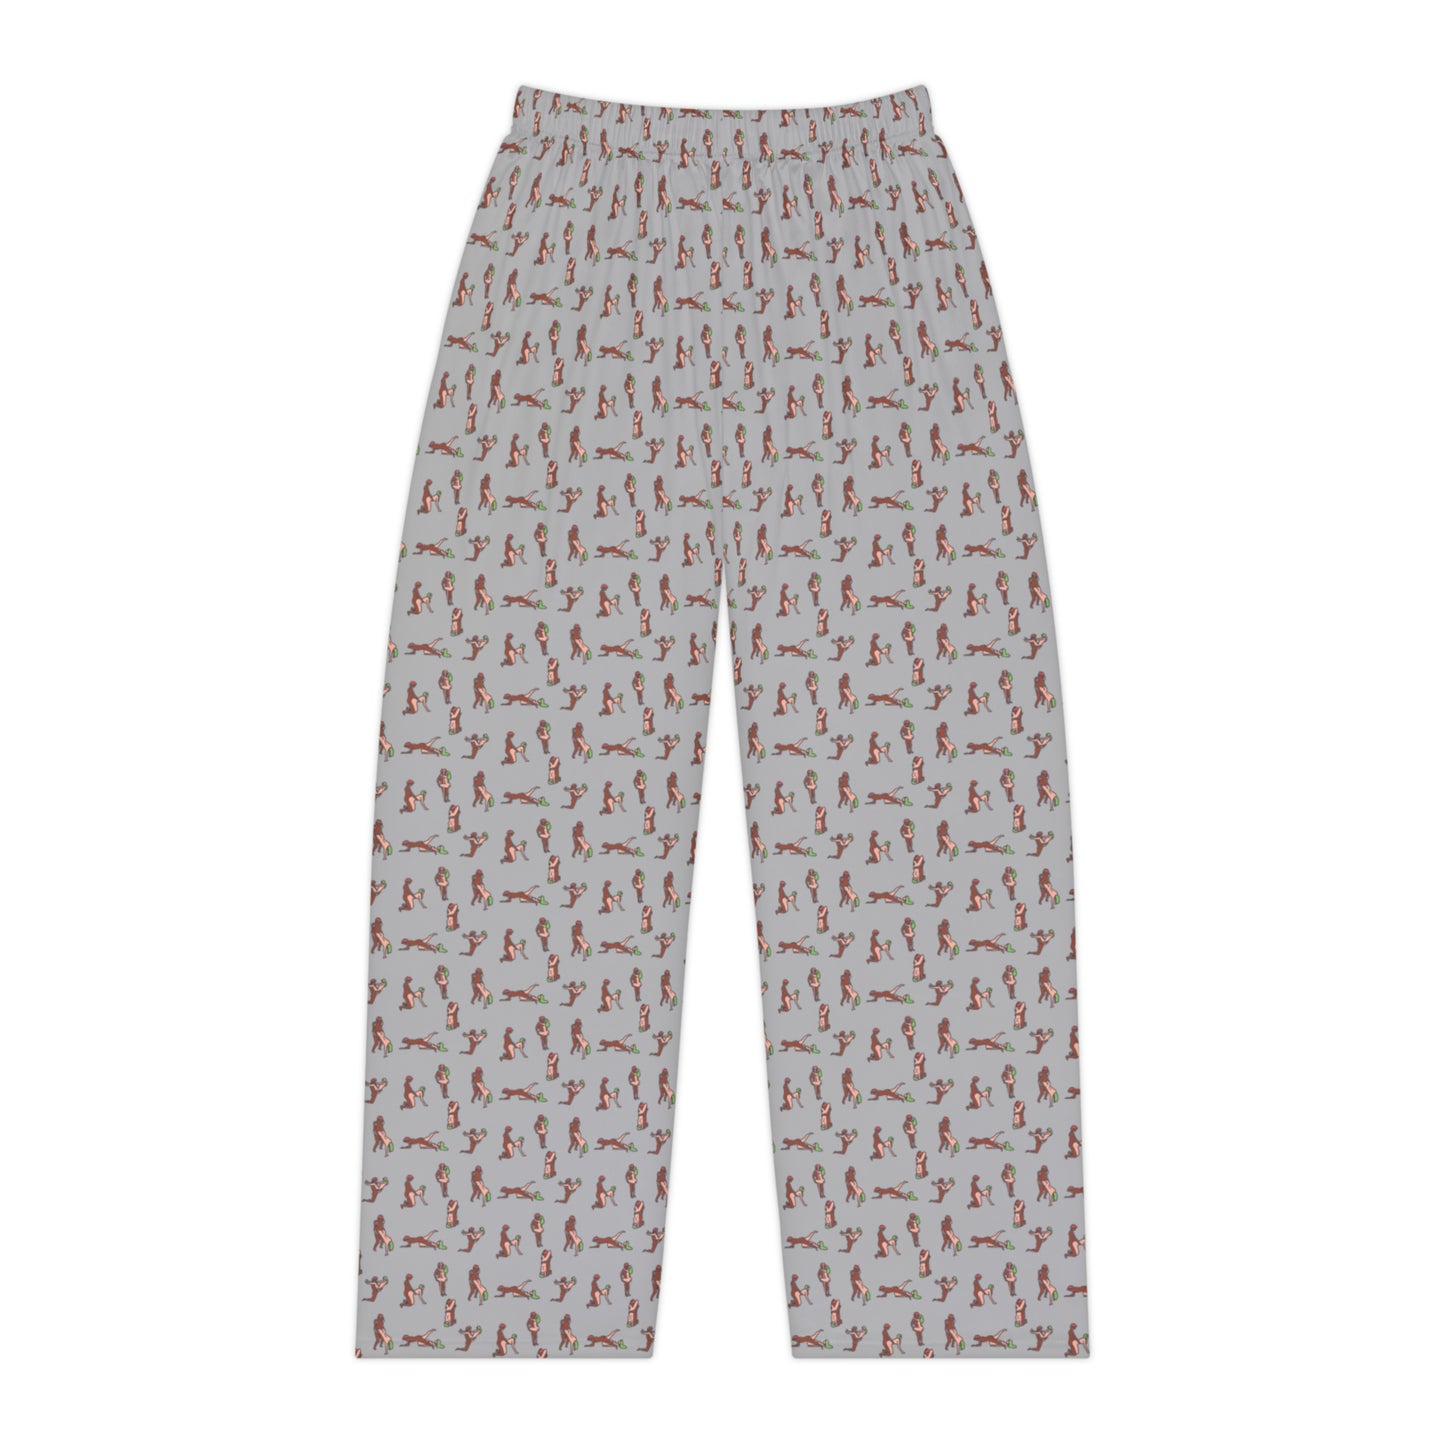 Karmasutra Women's Pajama Pants